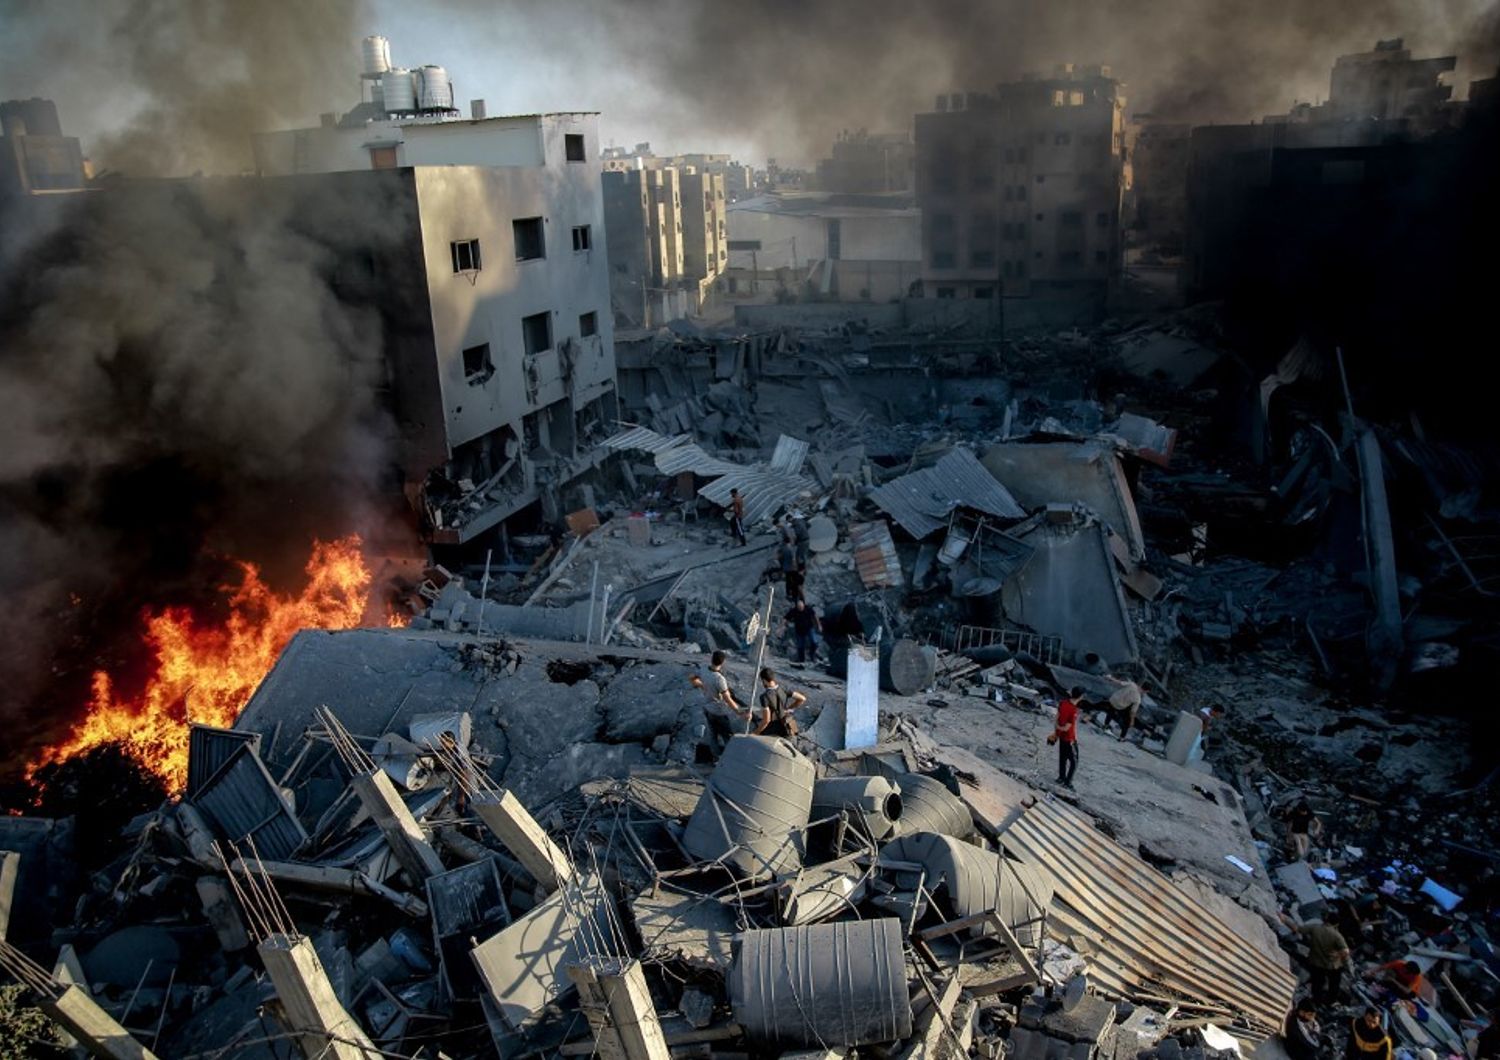 usa bombardano siria gaza israele ostaggi egitto